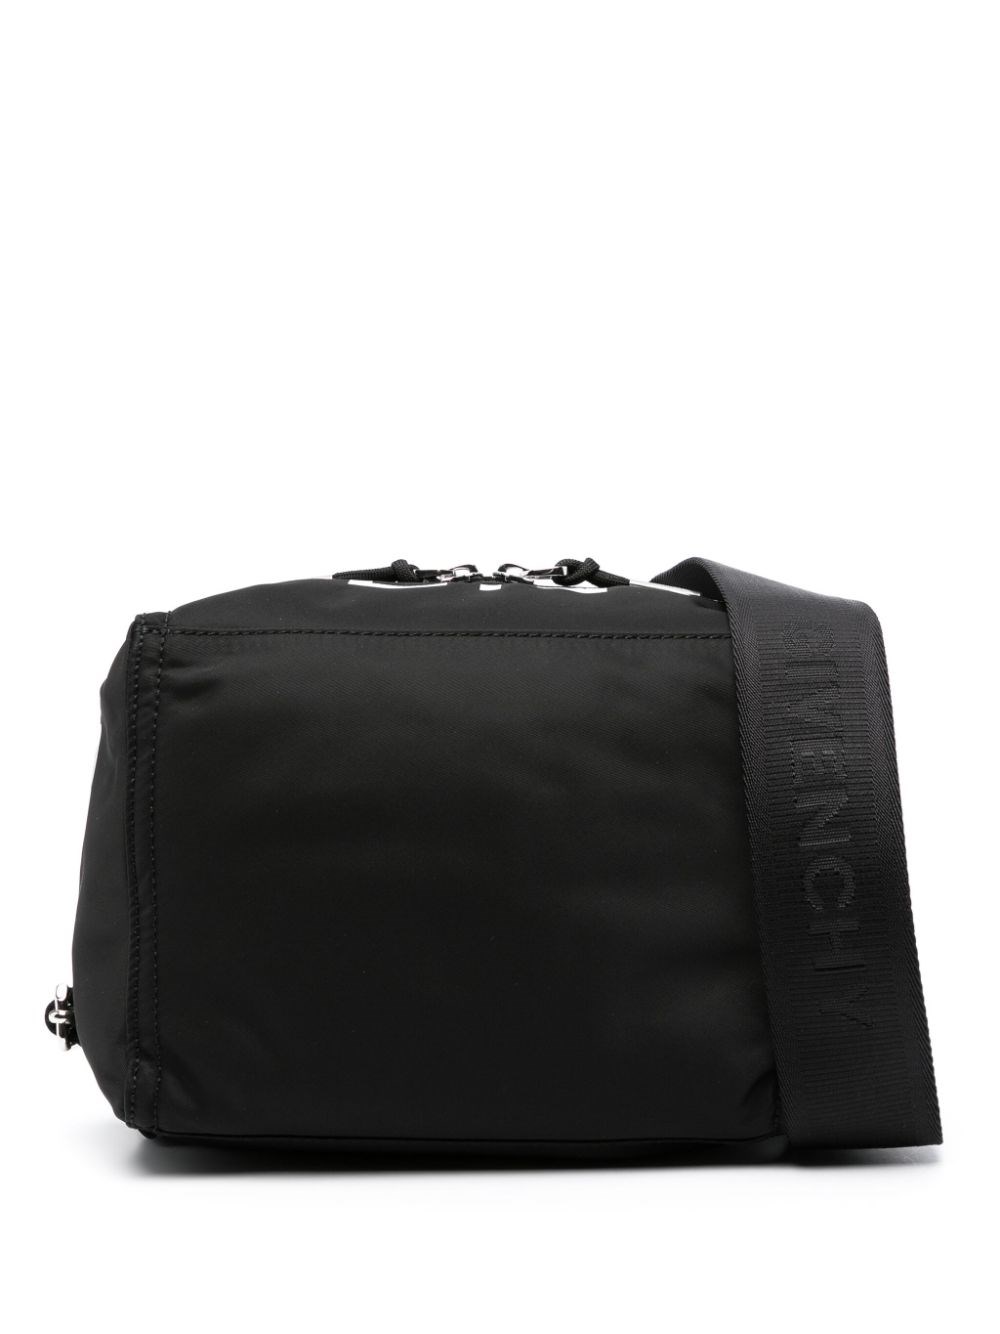 Givenchy Borsa Pandora Modello In Nylon In Black